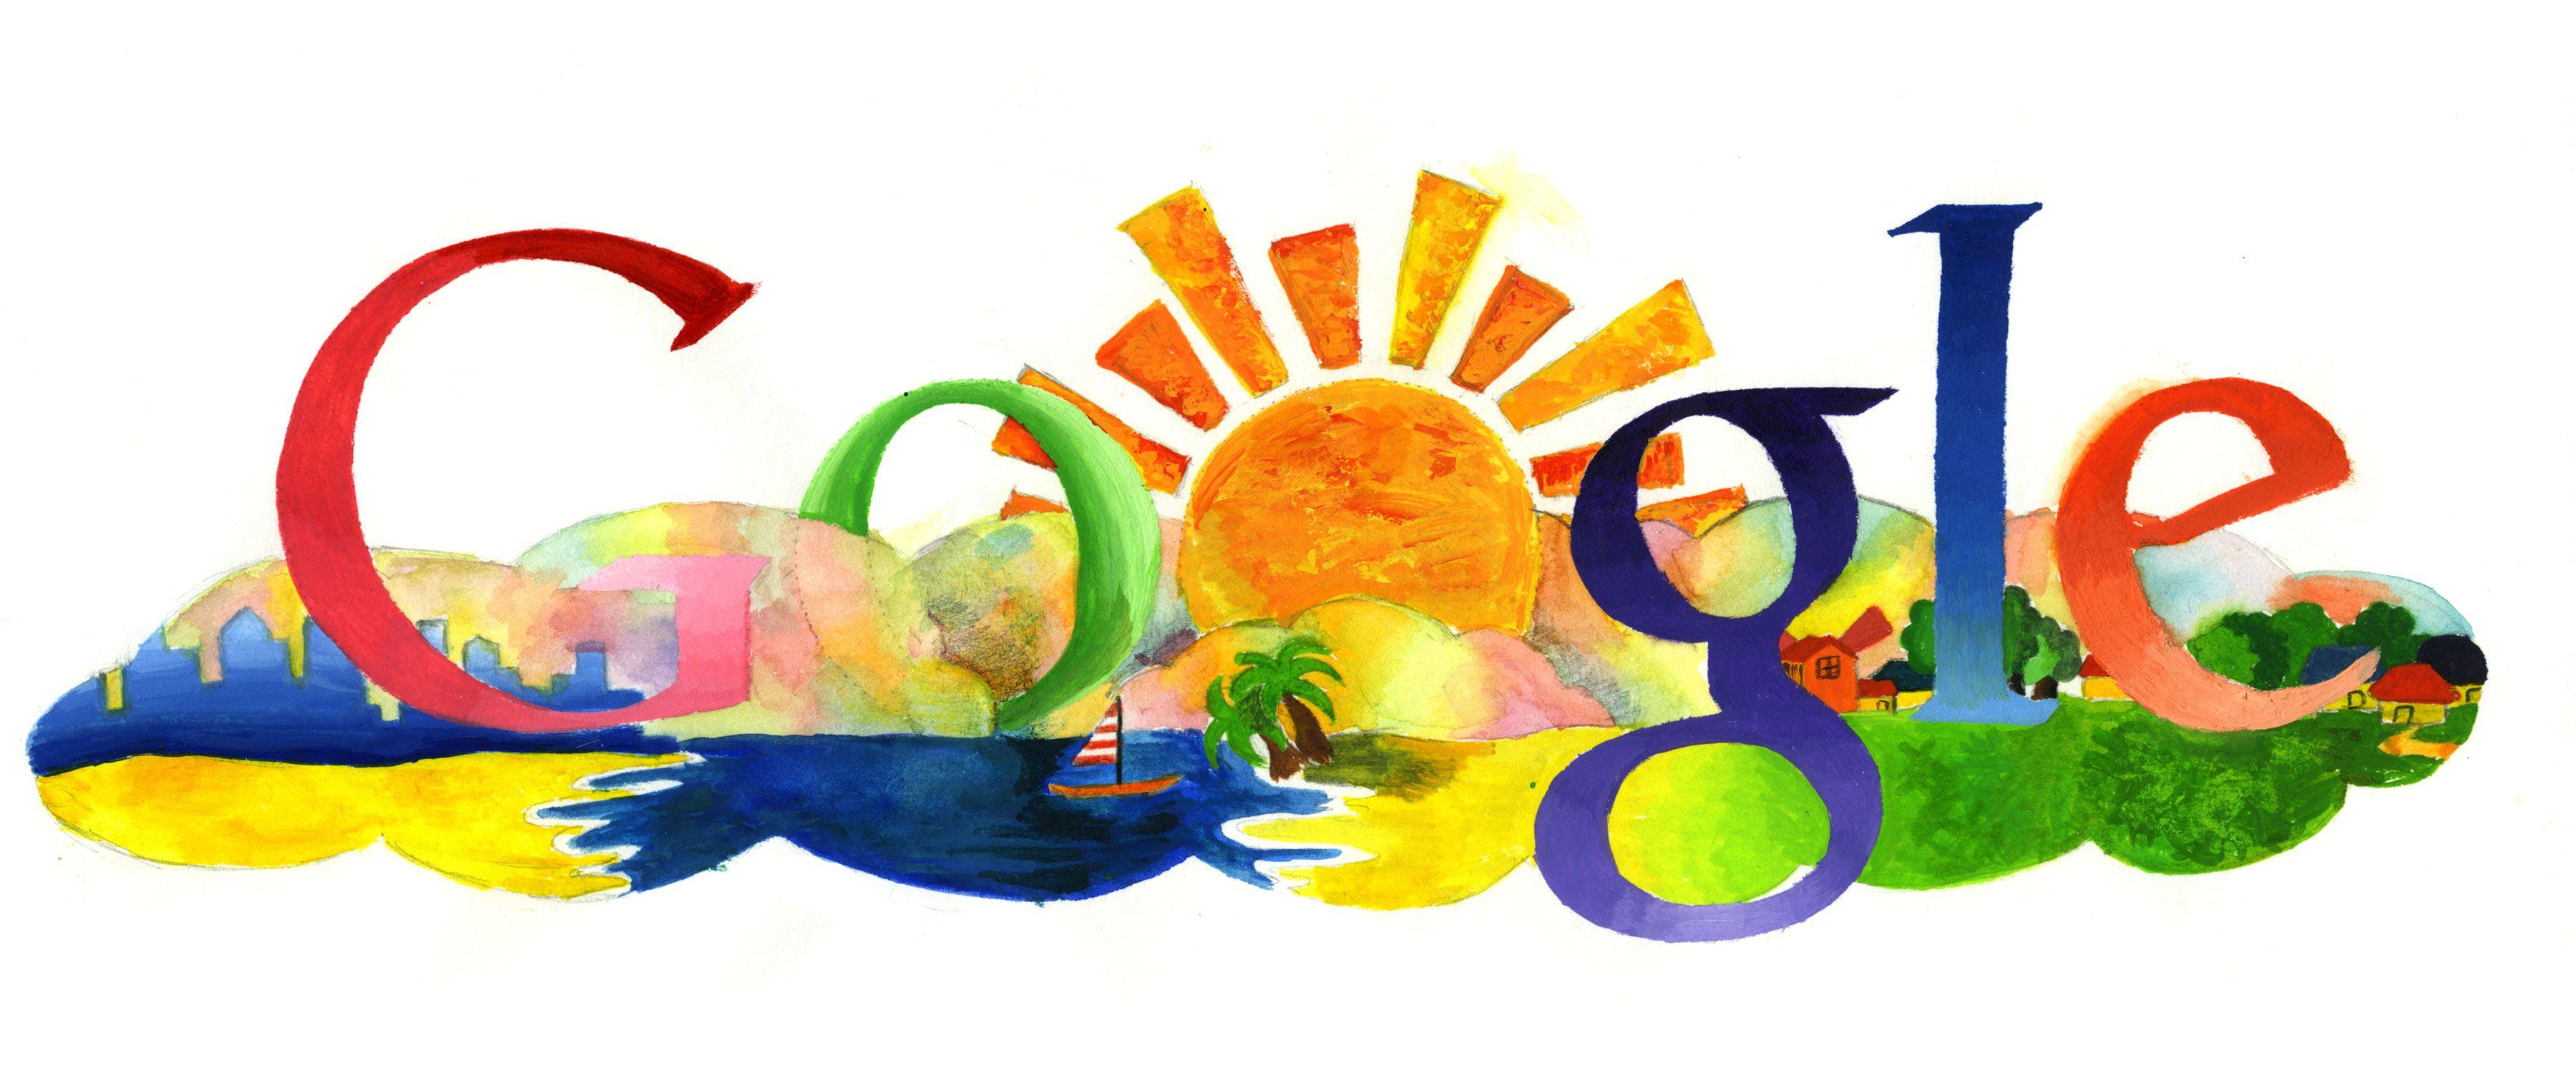 Spring Google Logo - Google doodle logo | Bipedias's Blog